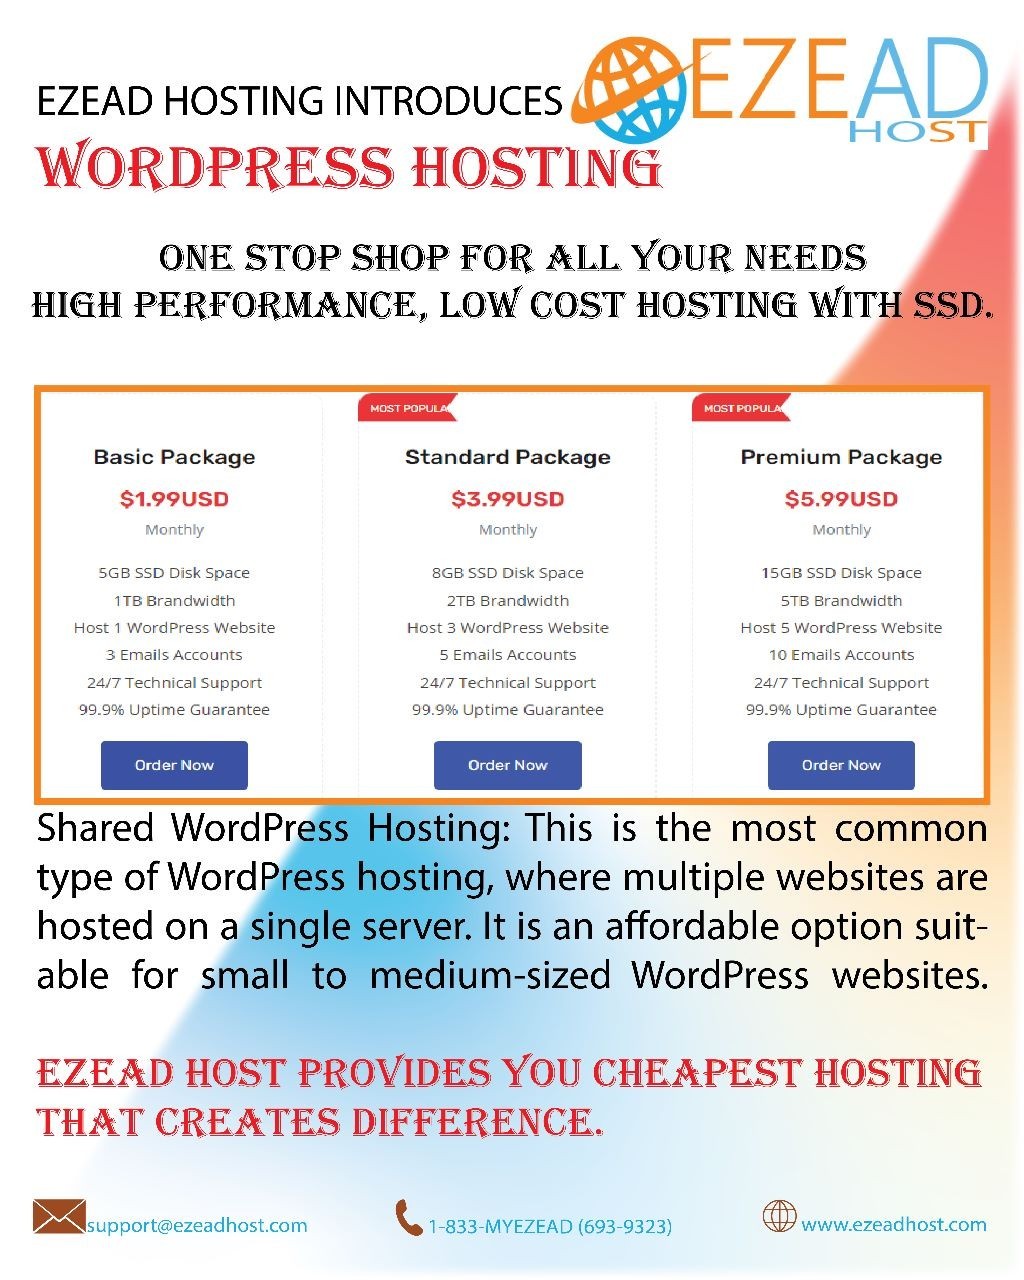 ezead-media-group-we-go-beyond-perfection-for-web-hosting-web-design-development-big-7